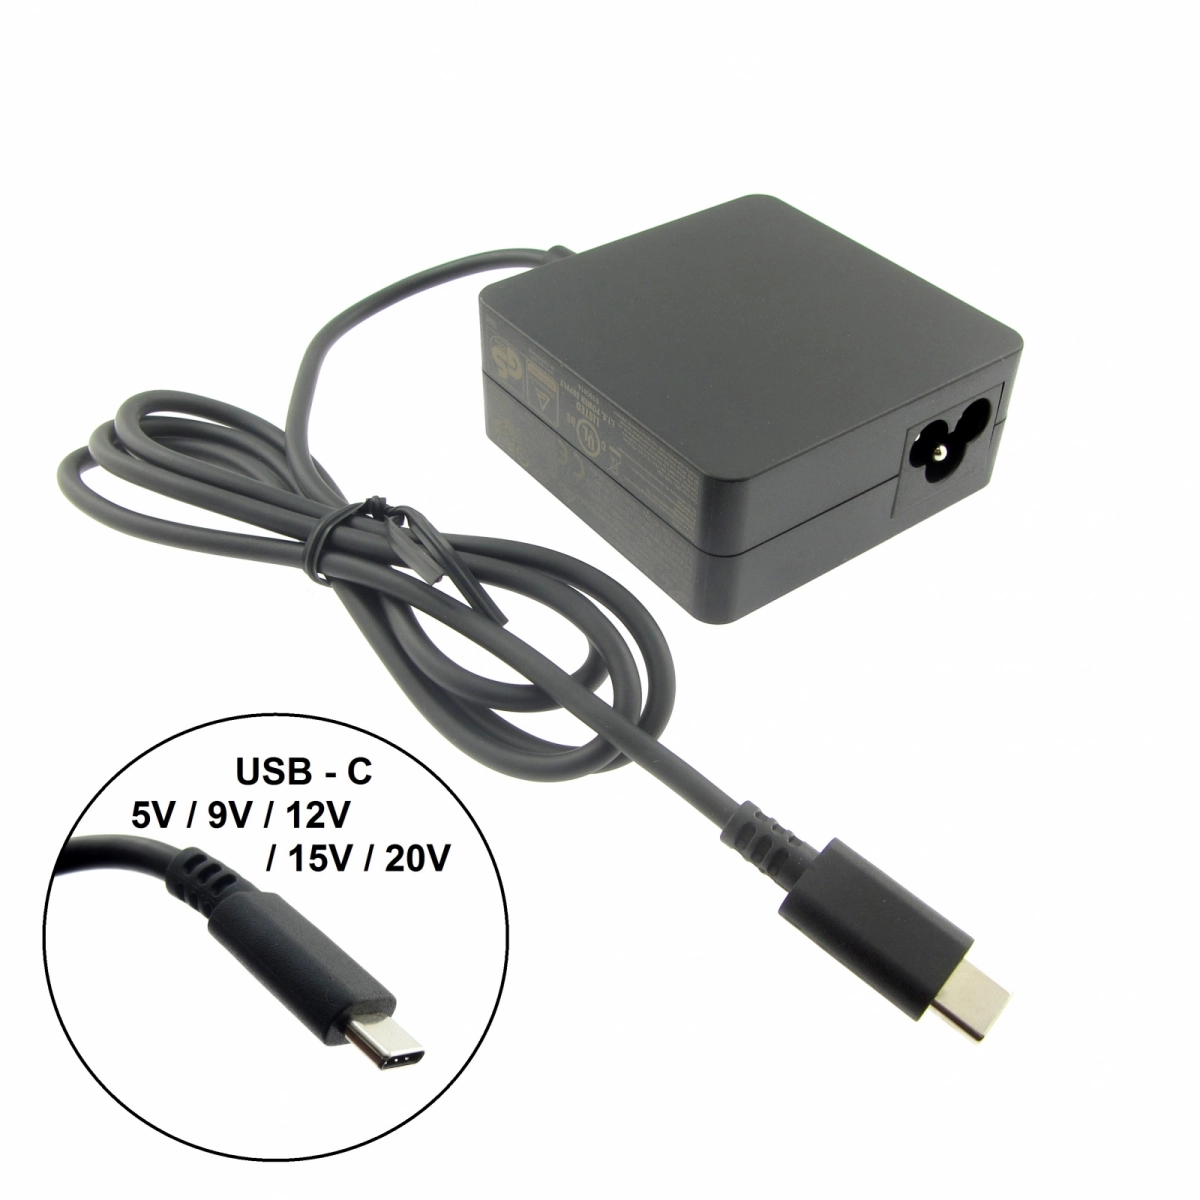 Original Netzteil für FSP 9NA0658207, 20V, 3.25A, Stecker USB-C, 65W